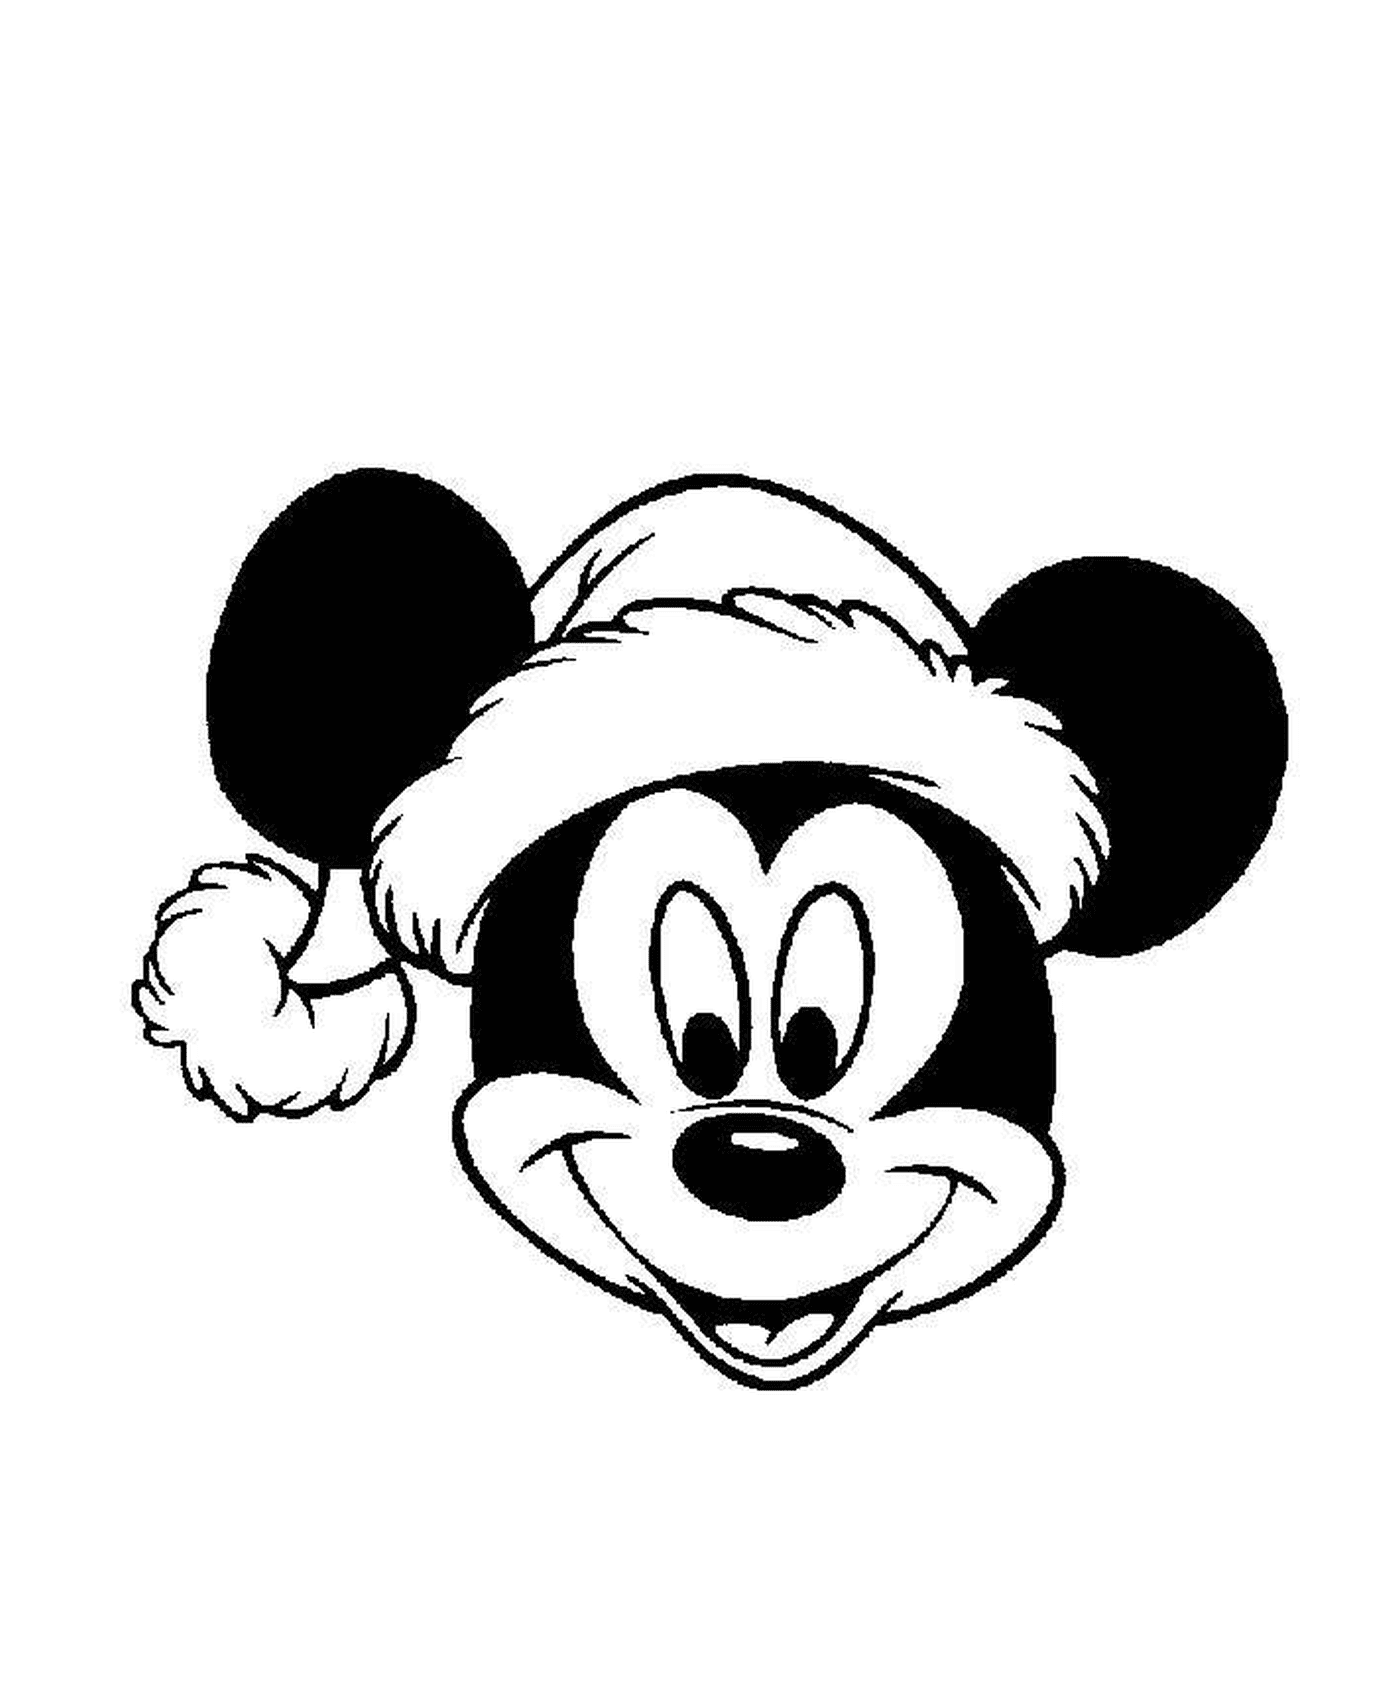  Mickey with Santa hat 